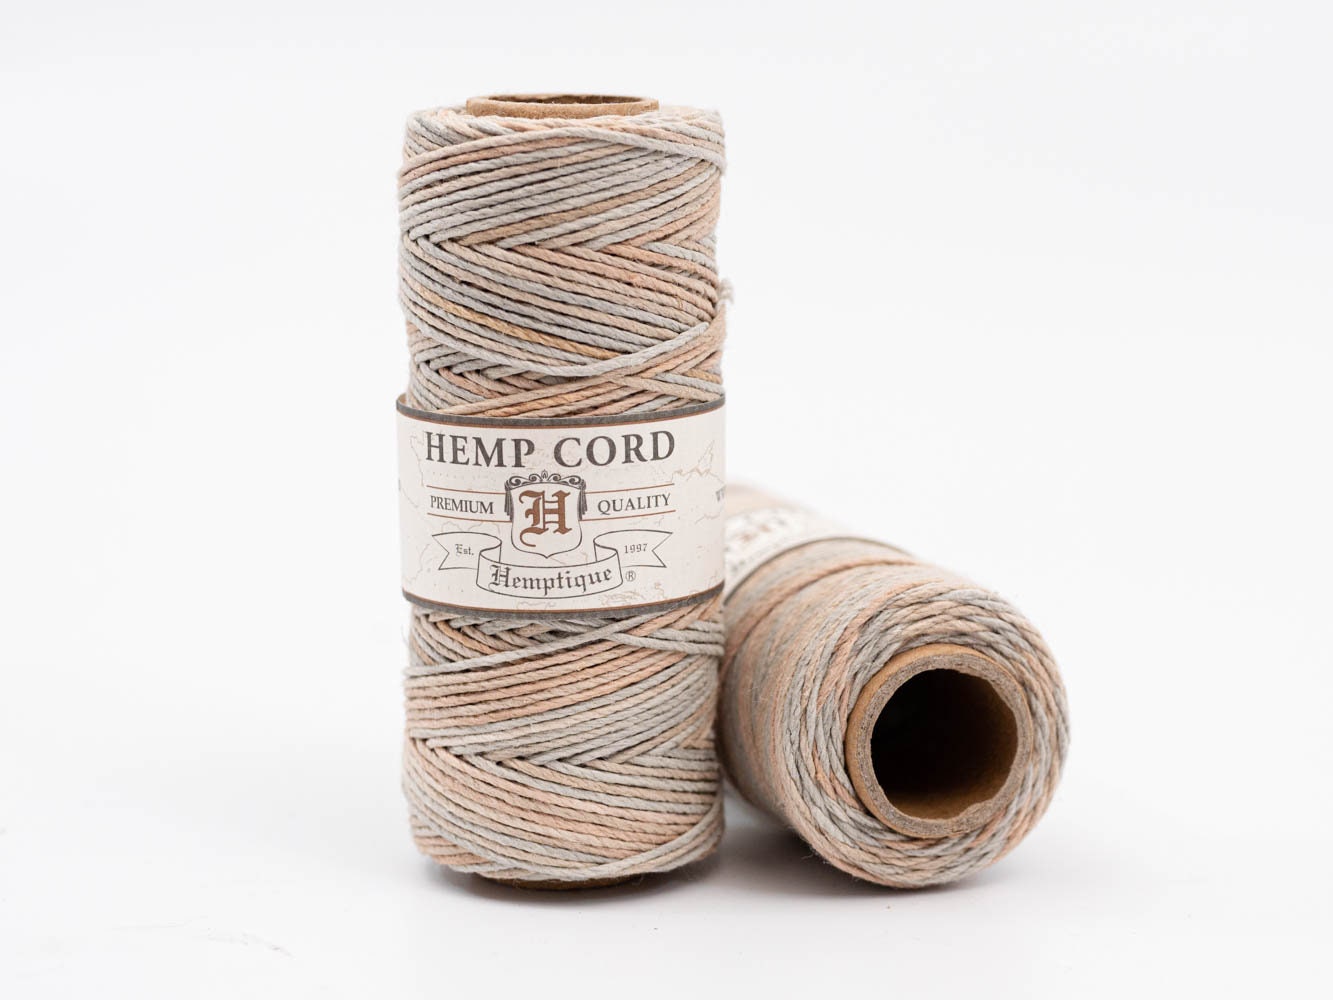 Natural Hemp Twine Cord, Unbleached Hemp Thread, Thick Hemp Rope Cord, Hemp  String, 1-2mm Diameter, 25 Yards/ 75 Feet 1 Piece 